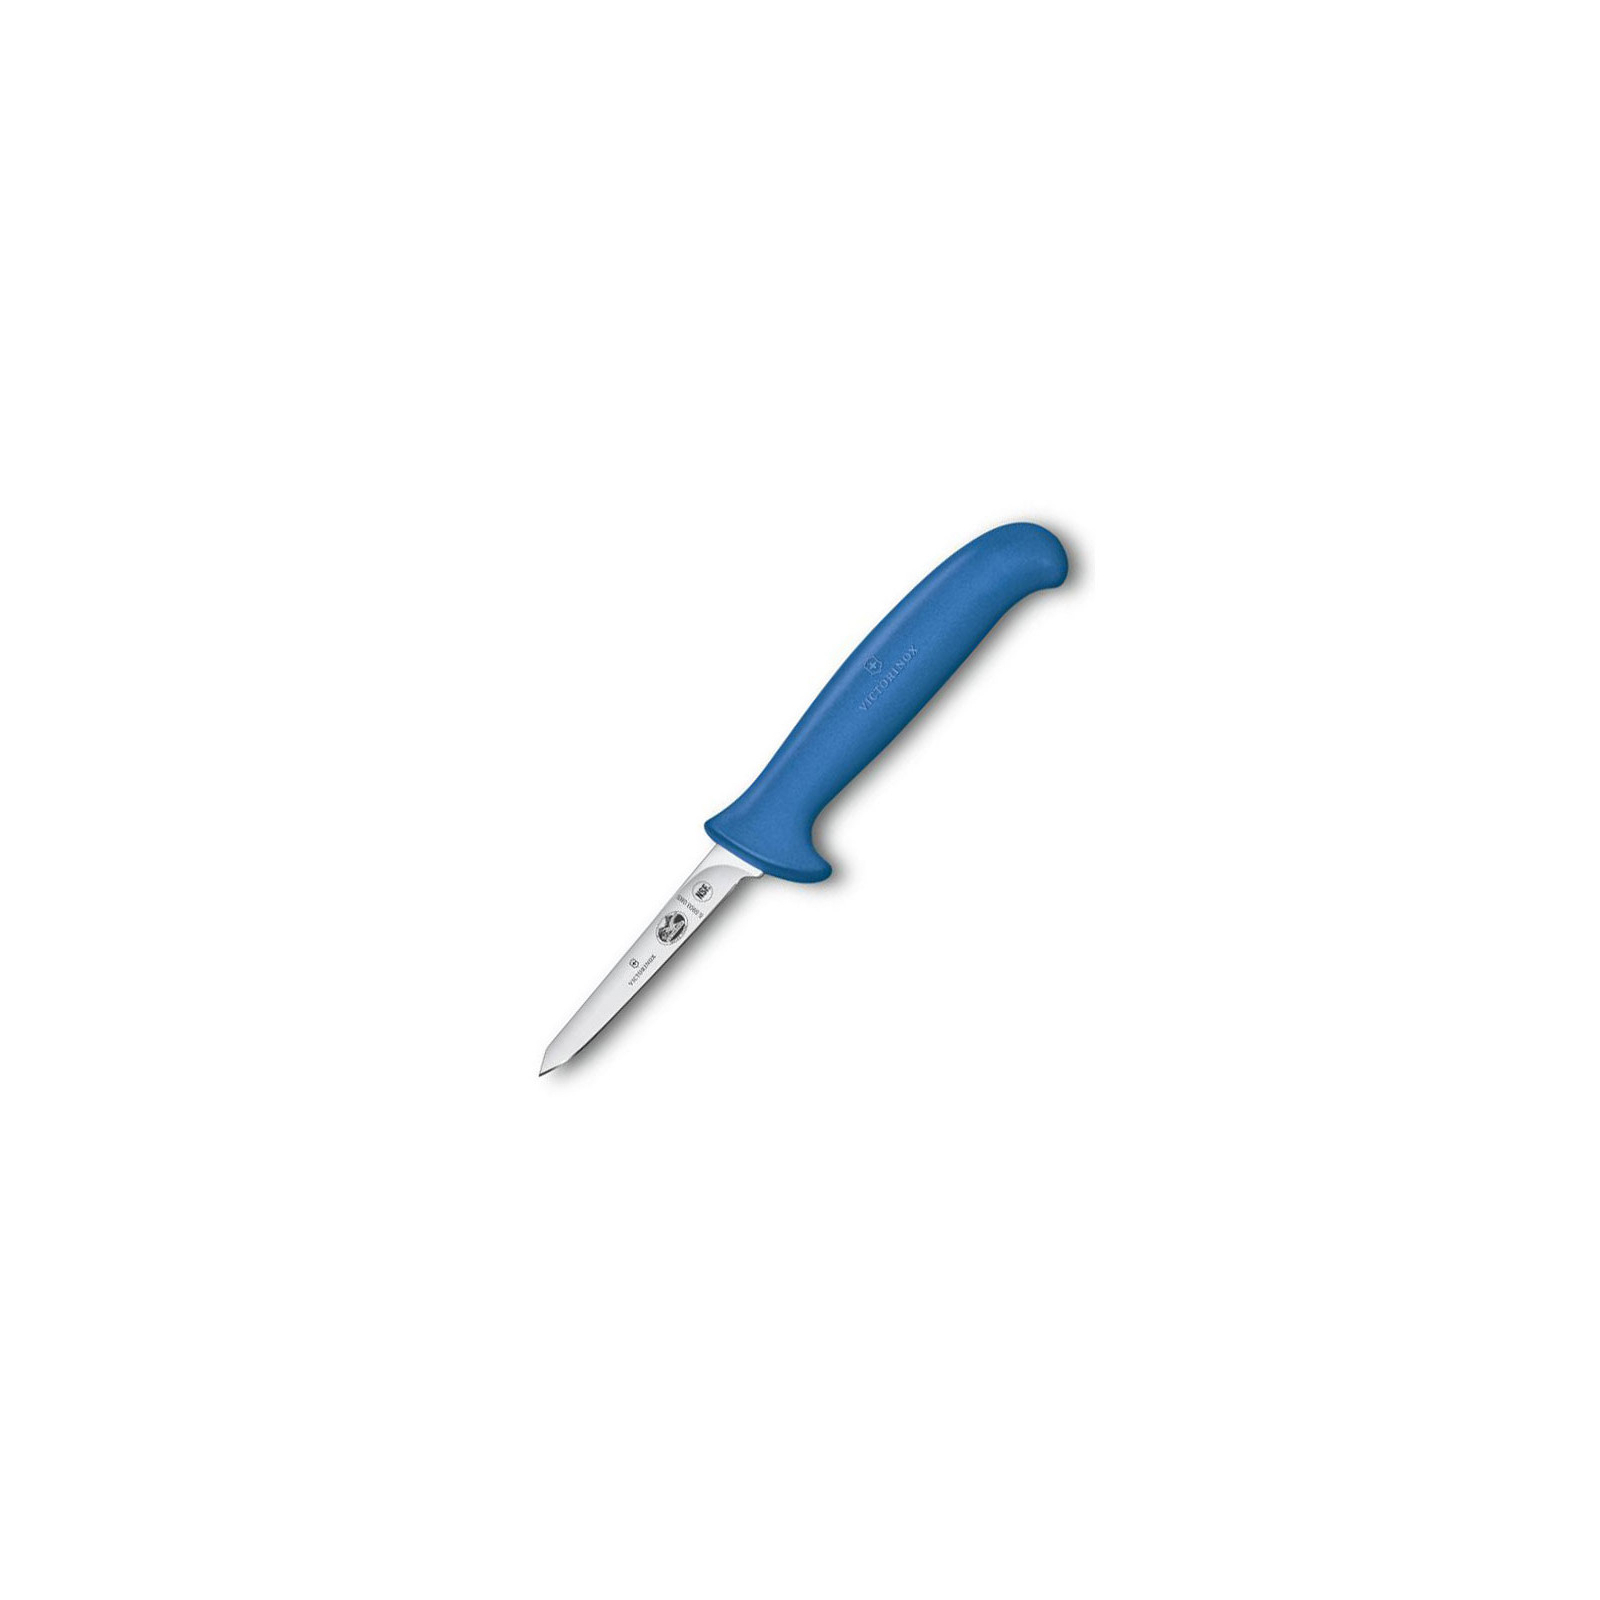 Кухонный нож Victorinox Fibrox Poultry 8см Small Blue (5.5902.08S) изображение 2